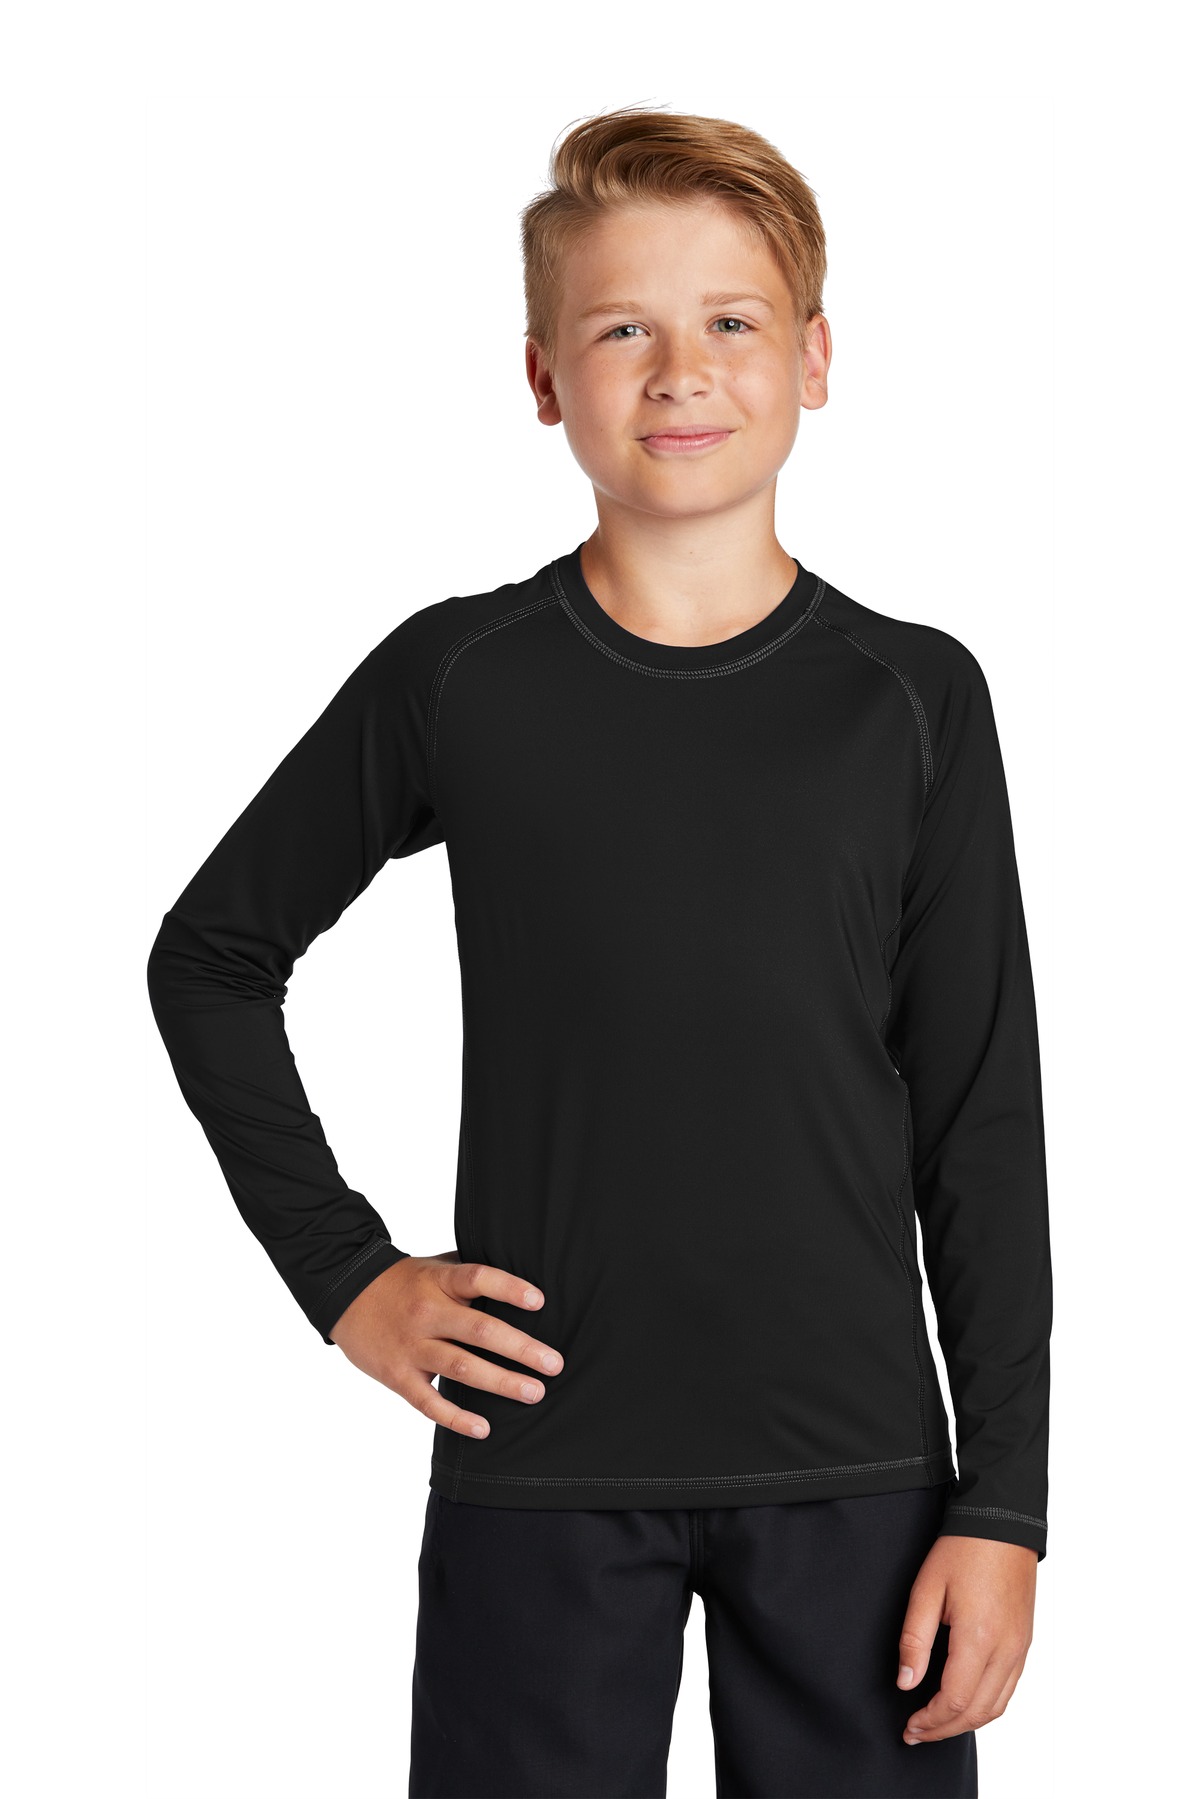 Sport-Tek Youth Long Sleeve Rashguard T-Shirt - YST470LS